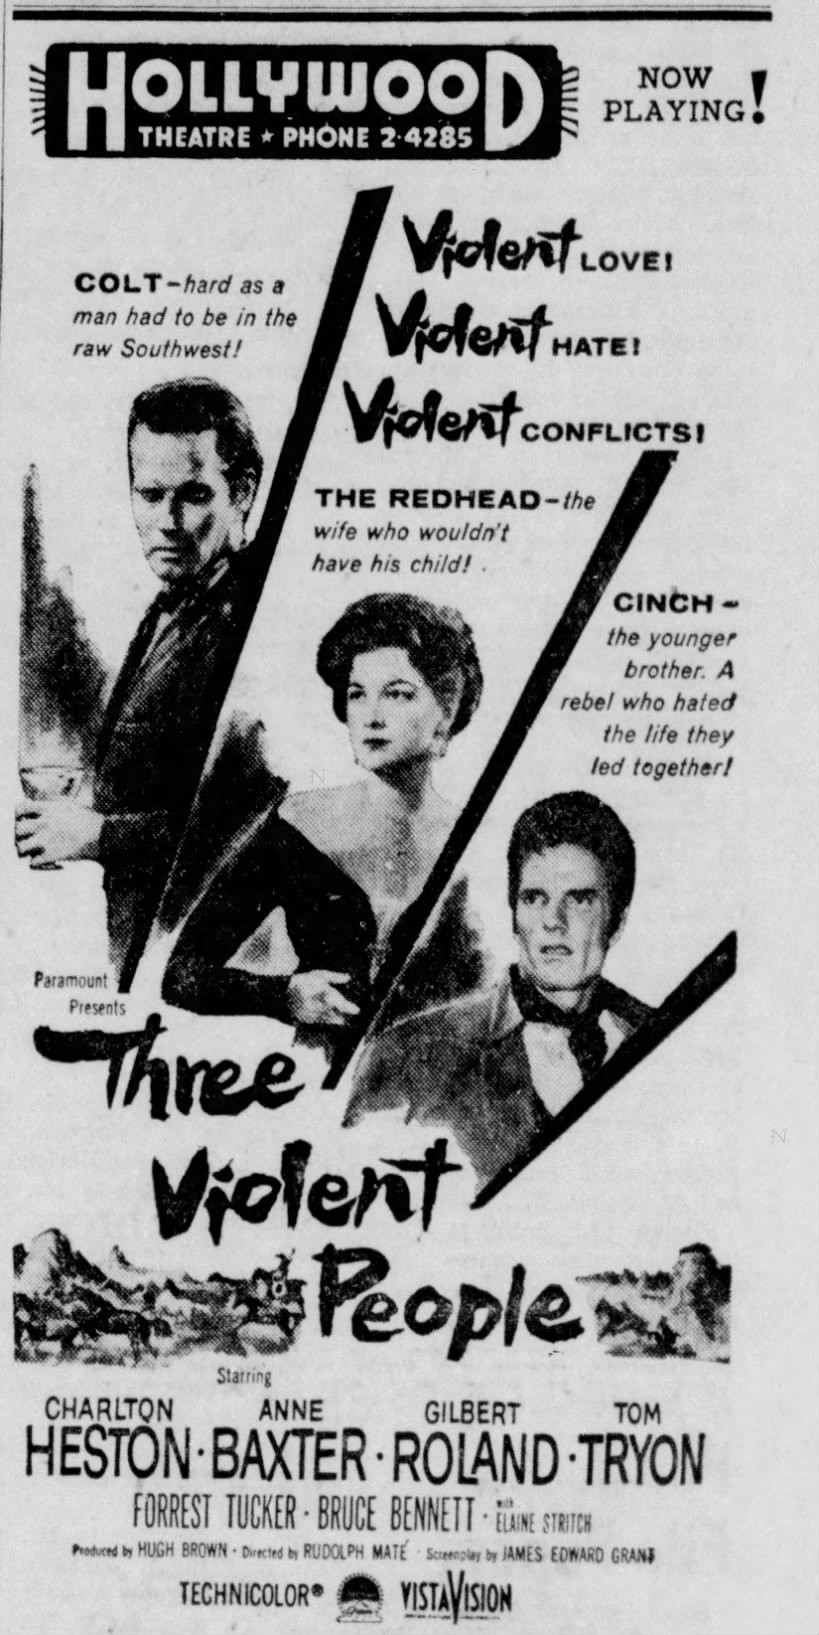 Hugh Brown produced "Three Violent People"